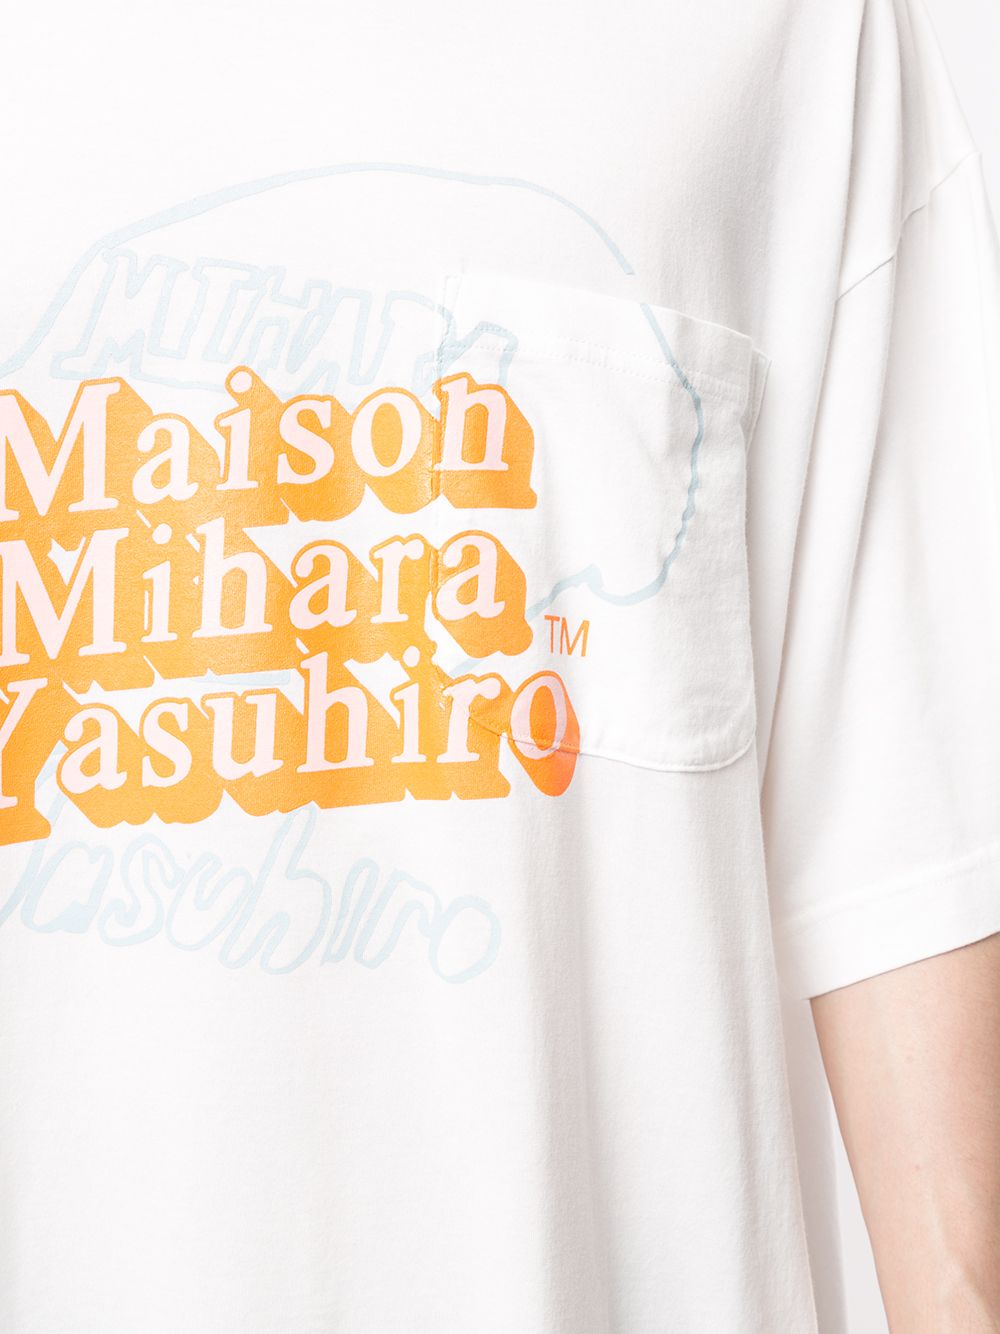 фото Maison mihara yasuhiro футболка с логотипом